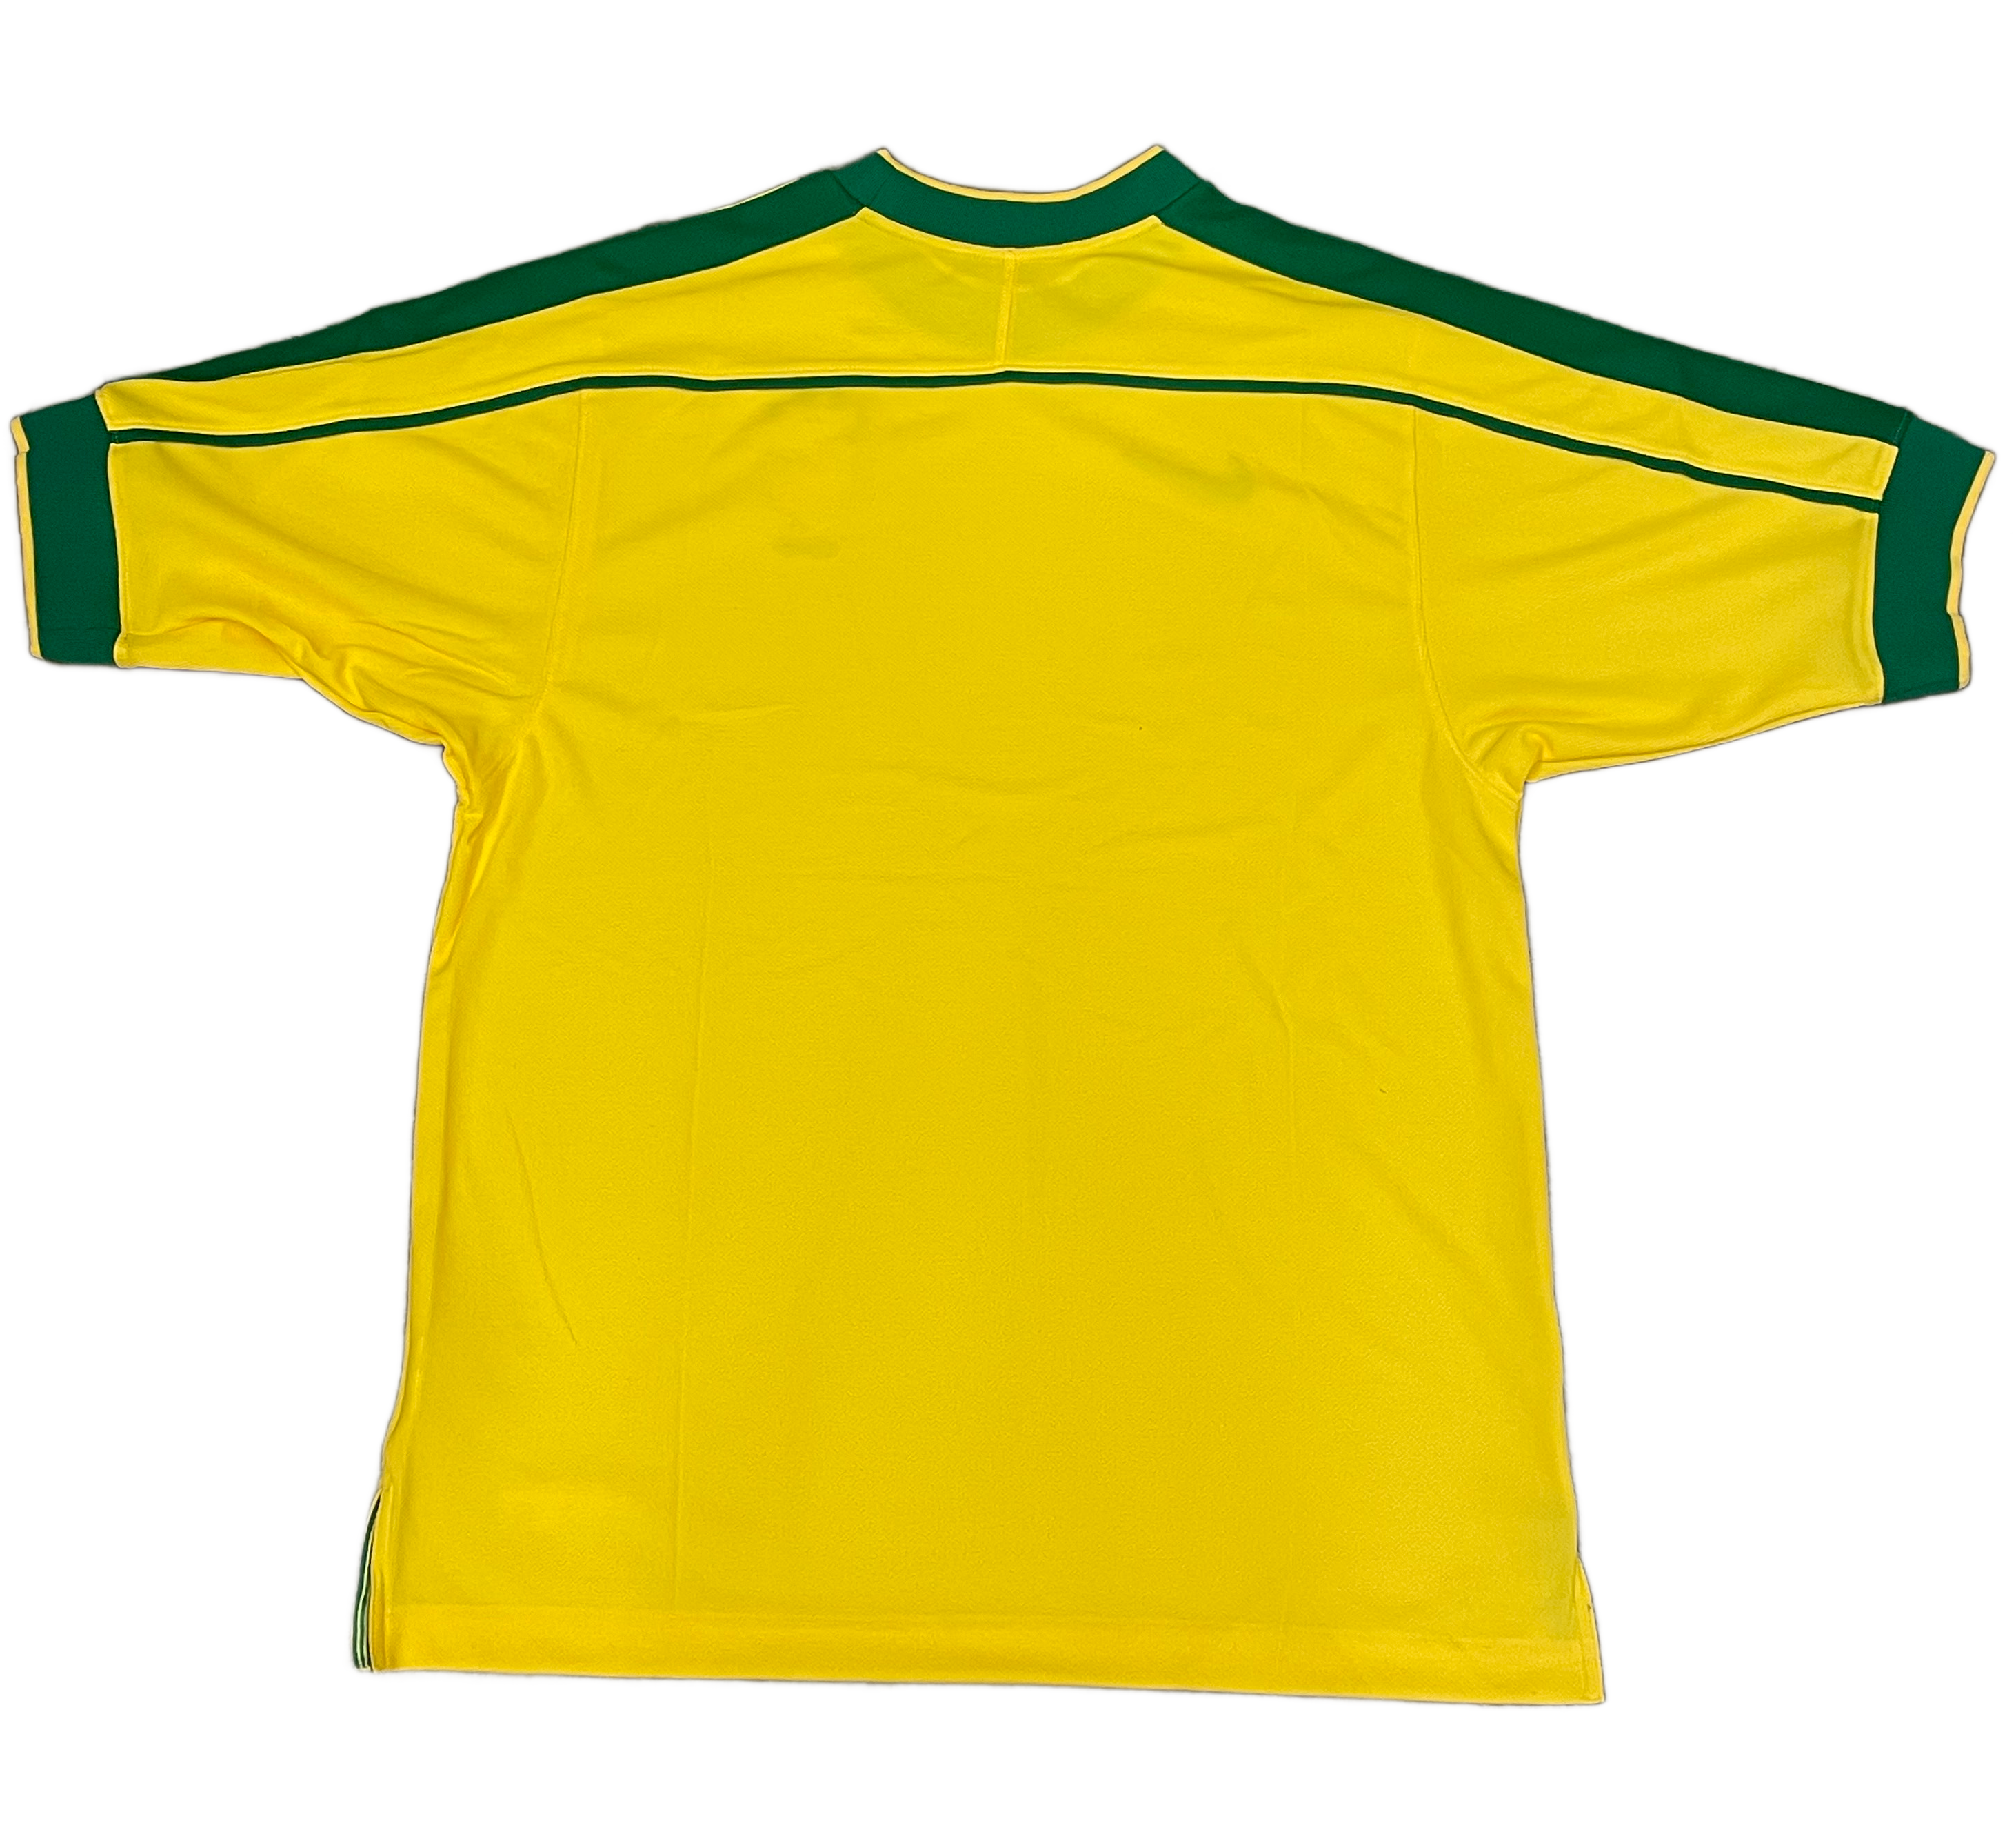 Nike Men's Brazil 1998 Reissue Soccer Replica Jersey